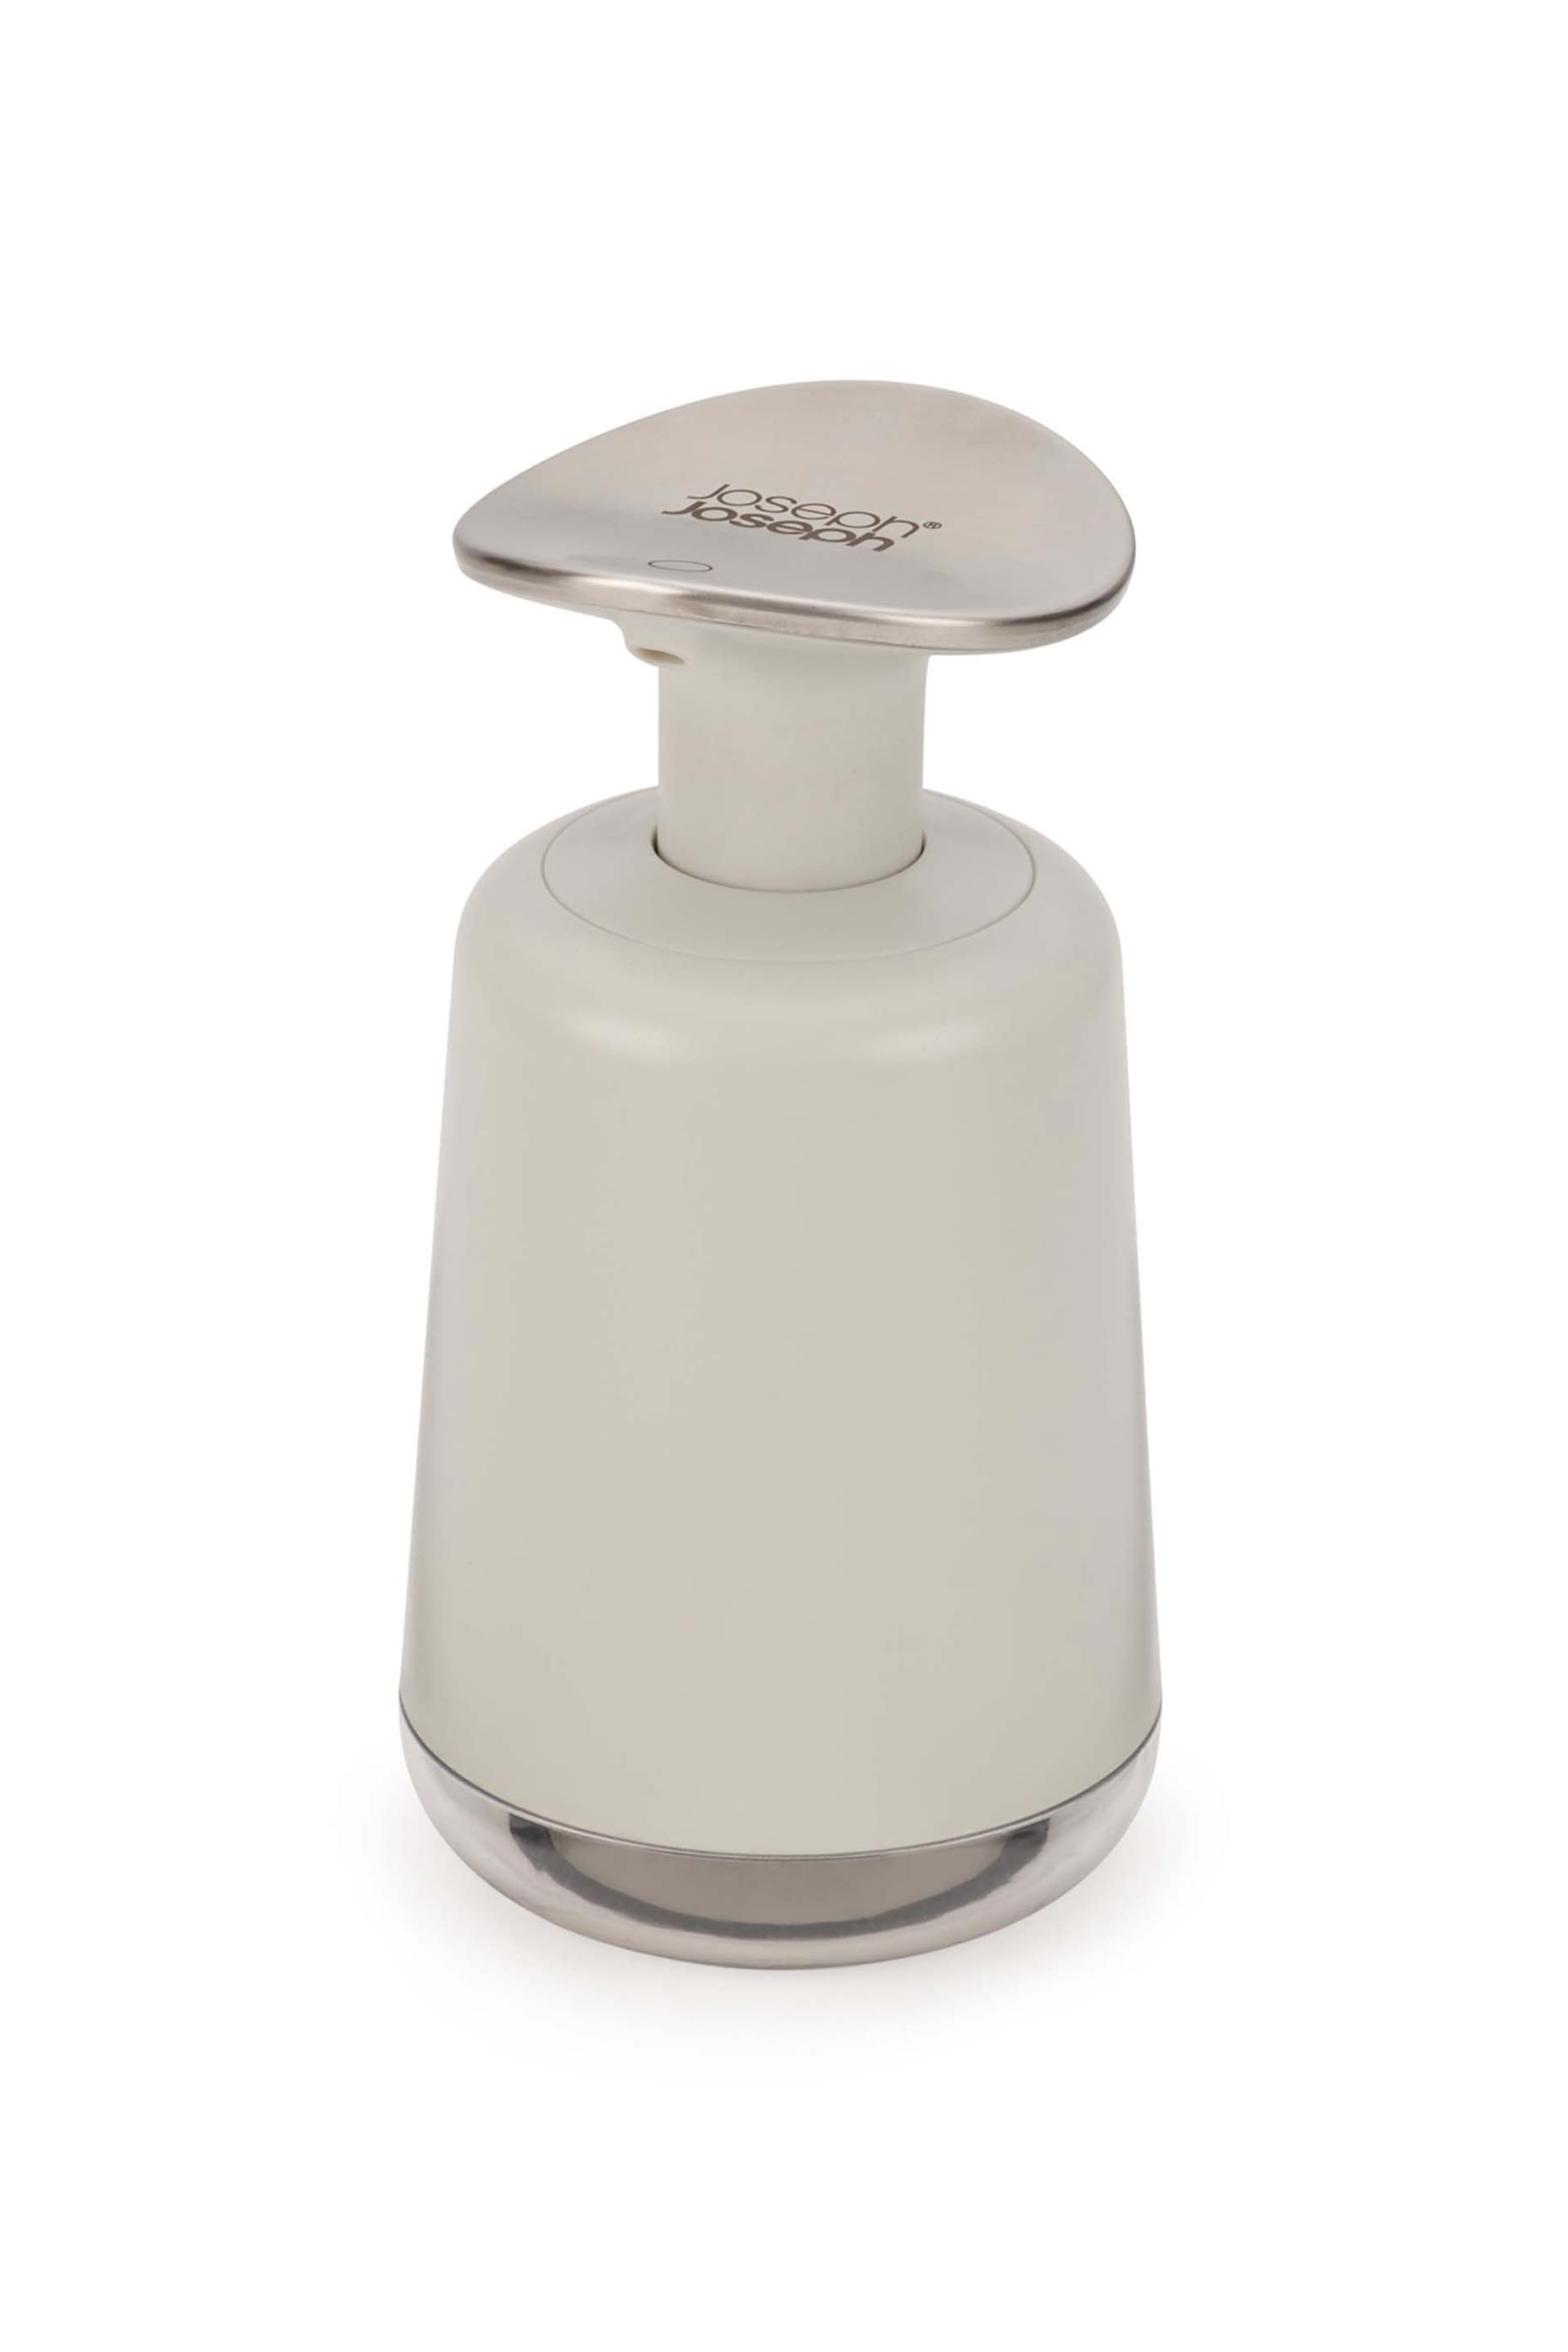 Joseph Joseph Natural Presto Hygienic Soap Dispenser - Image 4 of 4